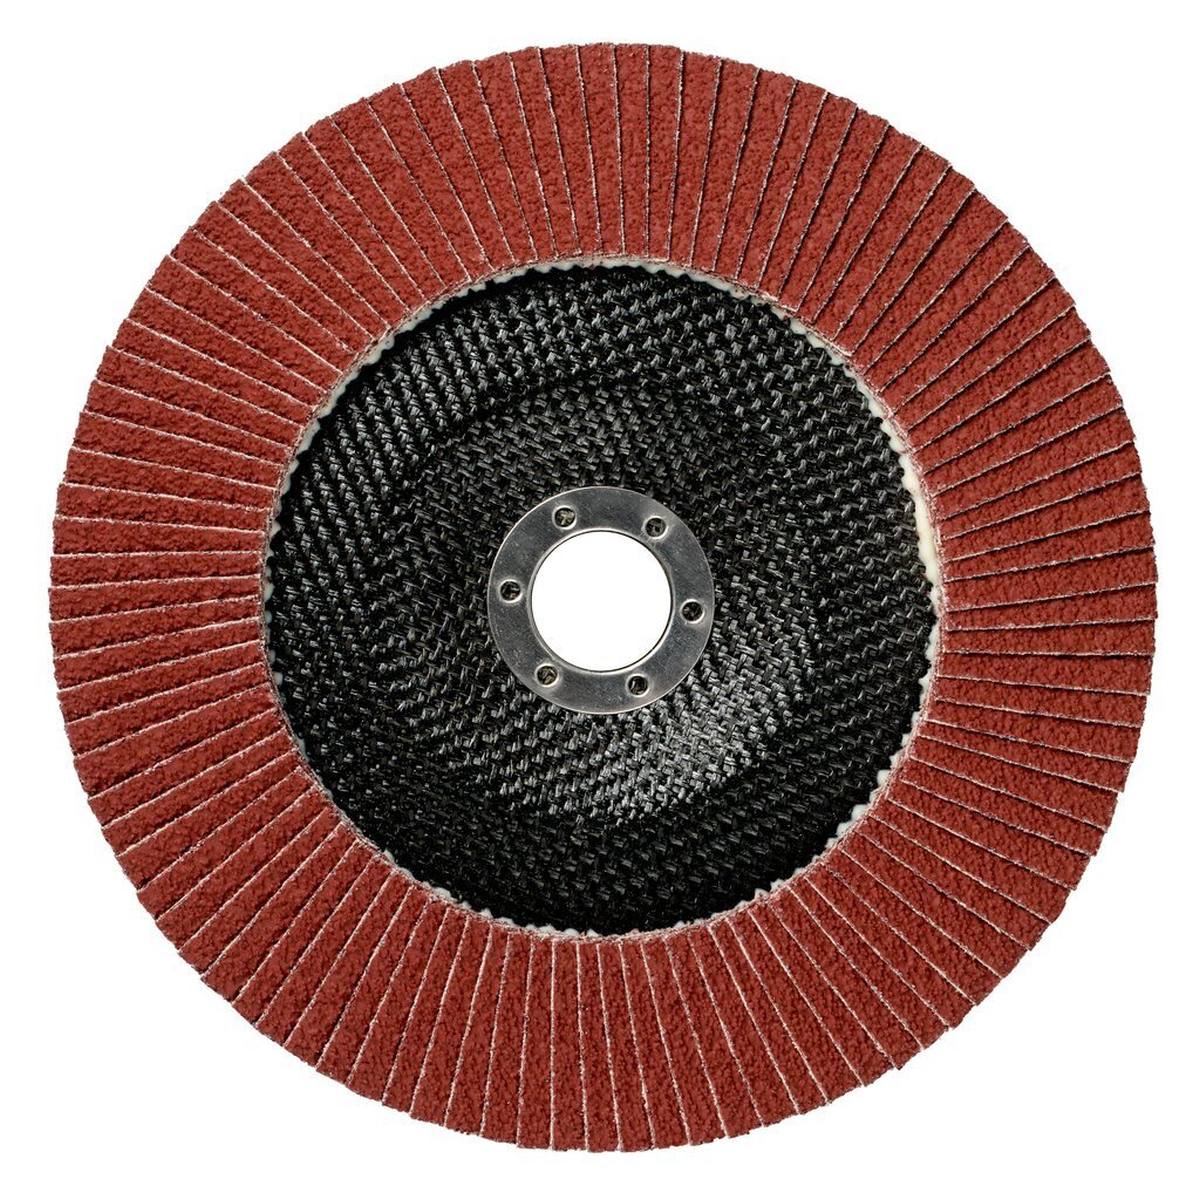 Disco lamellare 3M Cubitron II 967A, 180 mm, 22,23 mm, P40 #65060 conico